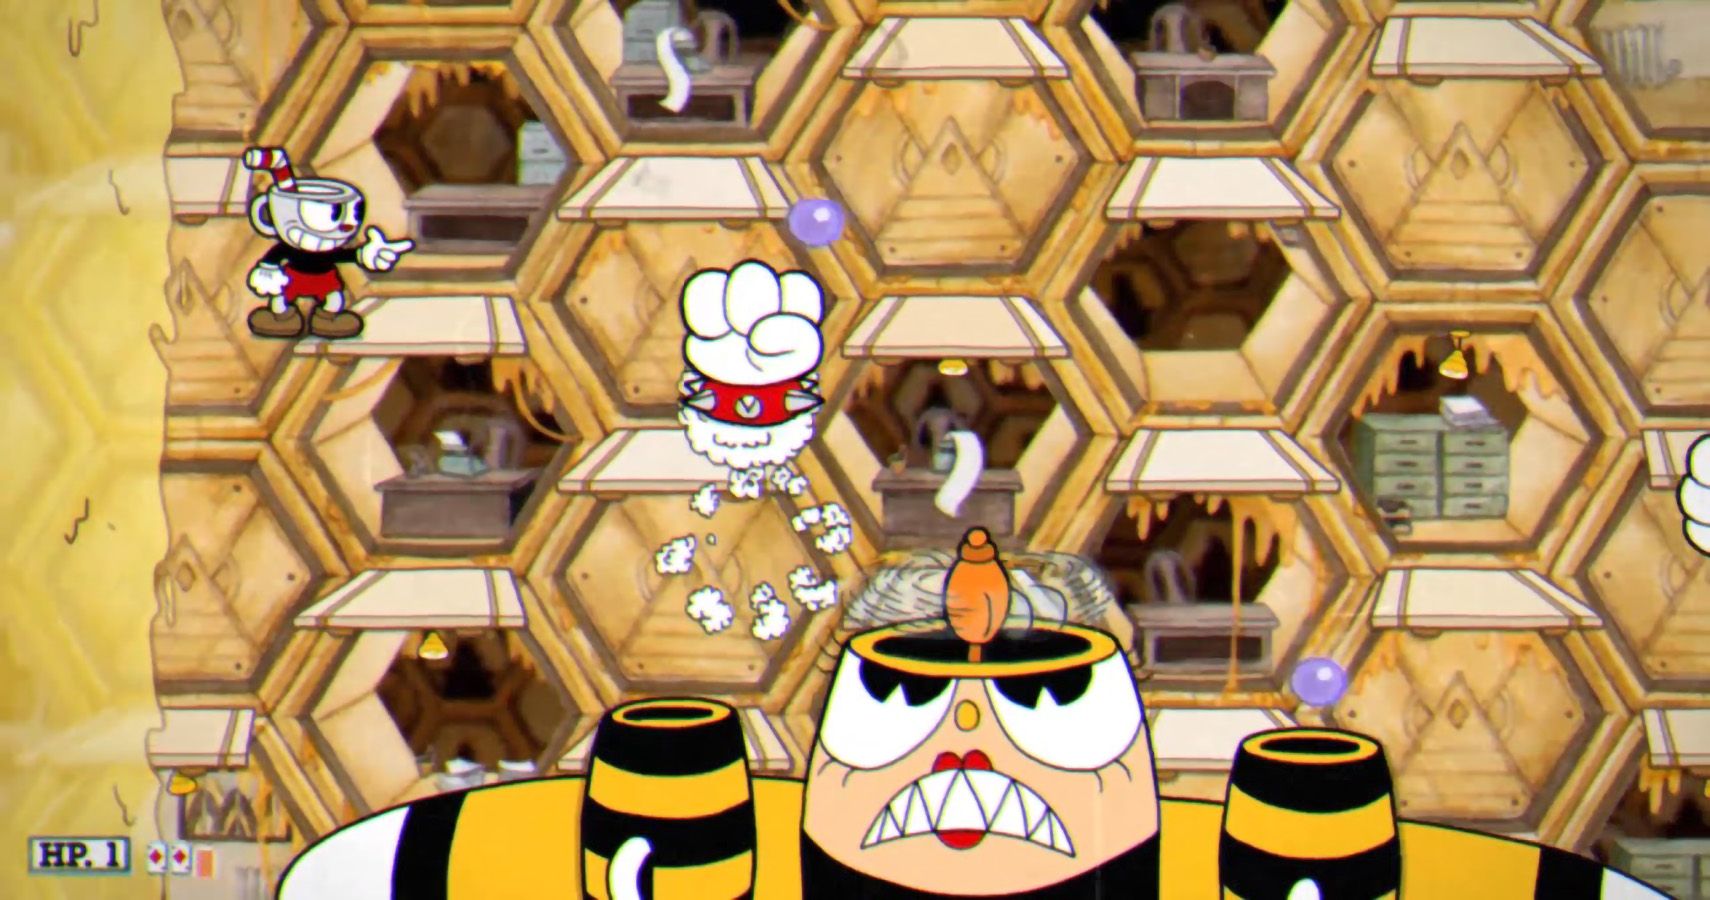 Honeybottoms boss fight in Cuphead